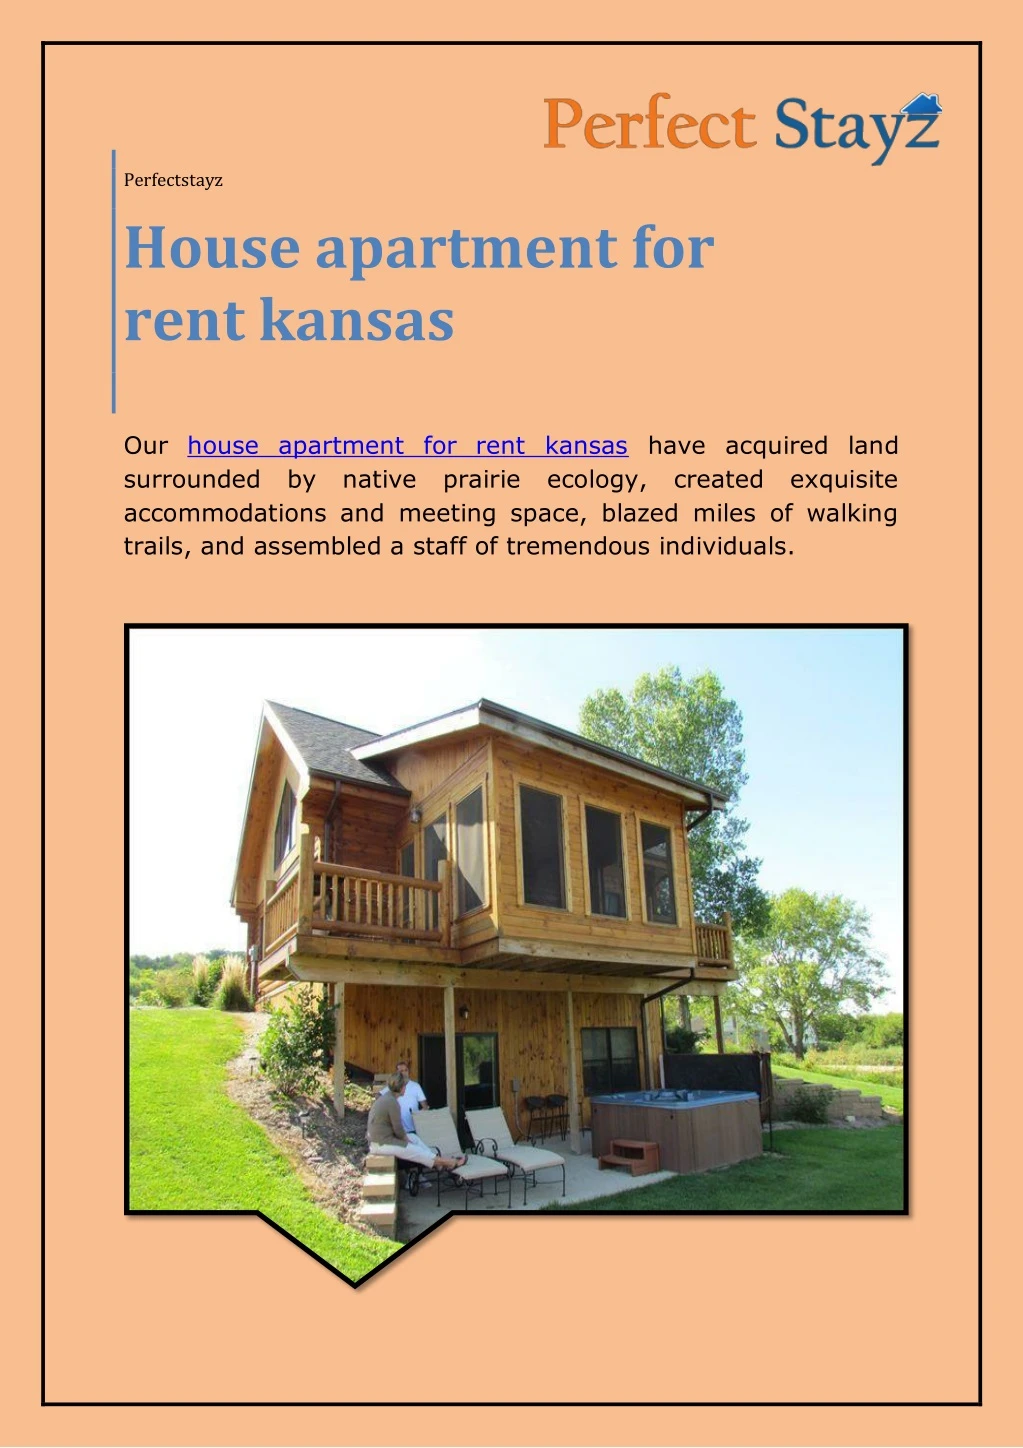 perfectstayz house apartment for rent kansas